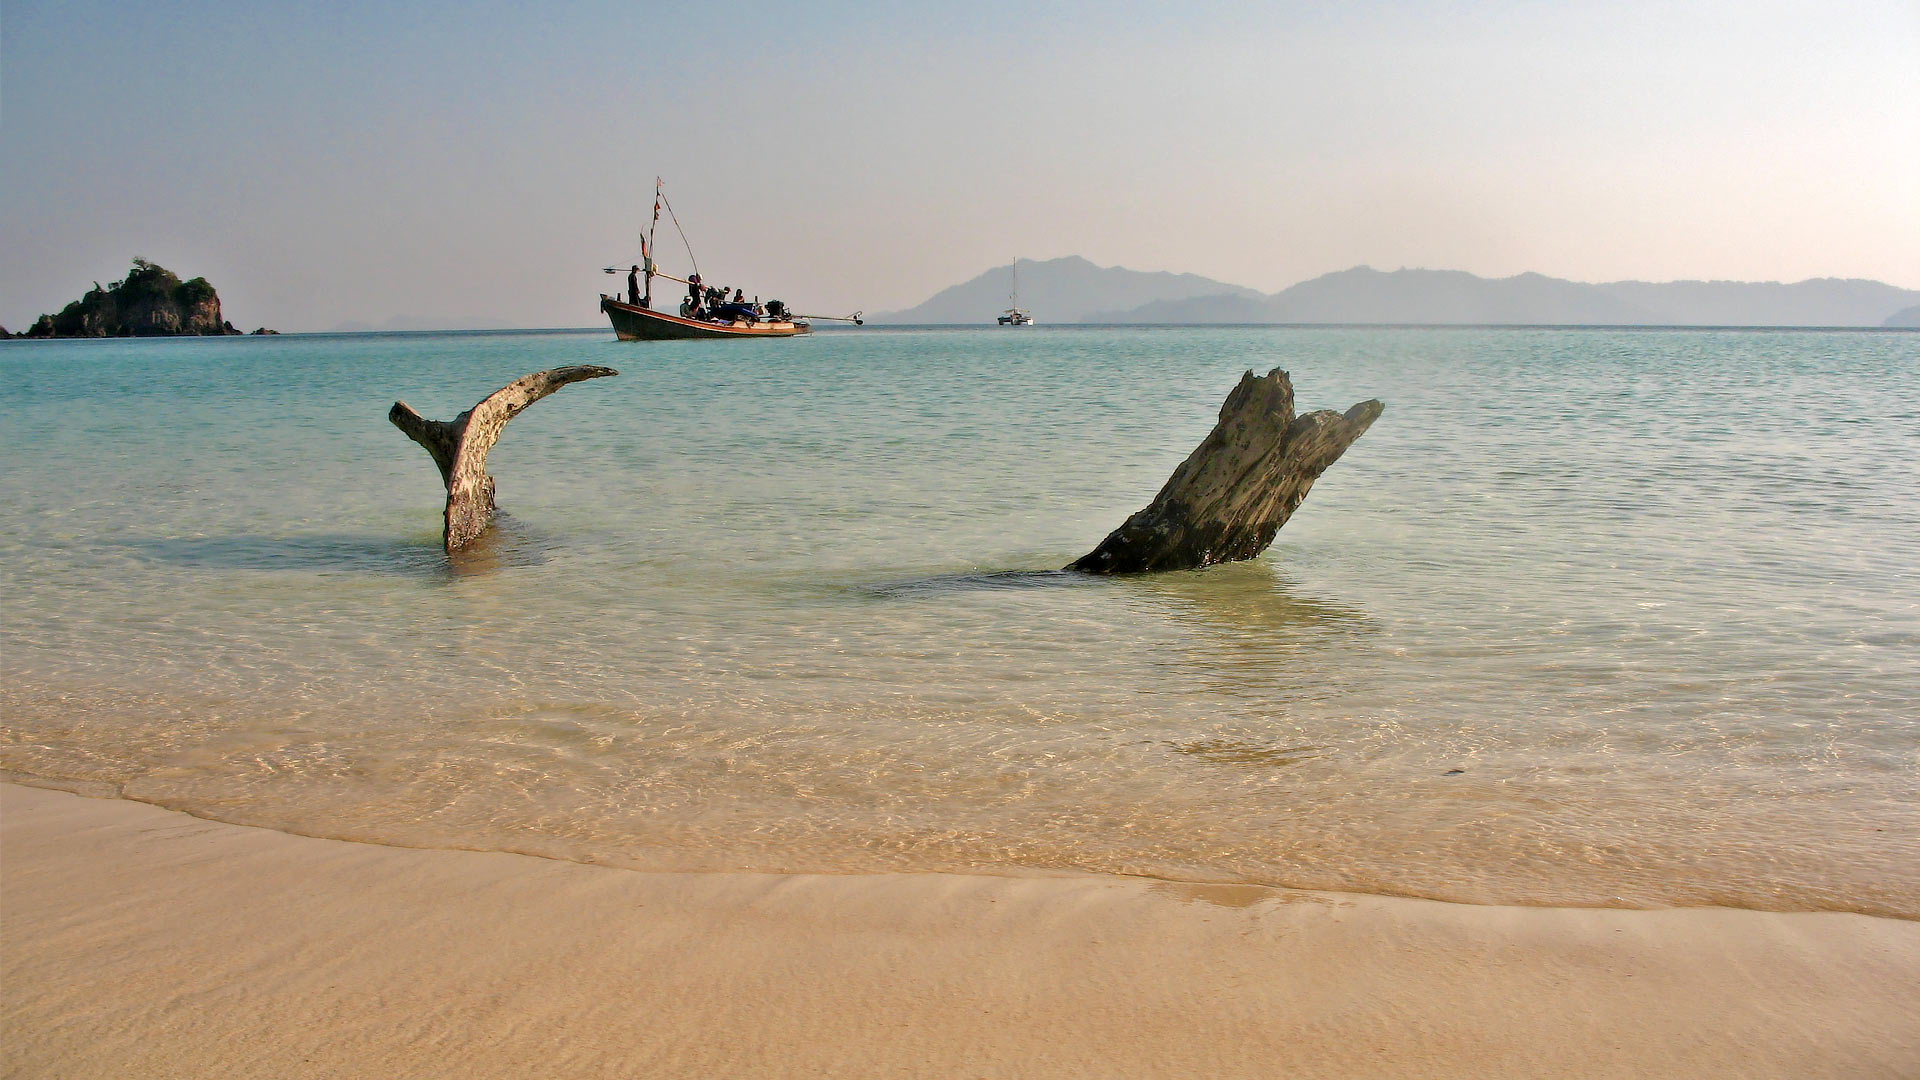 Island scene in the Mergui Archipelago Myanmar by superyacht.